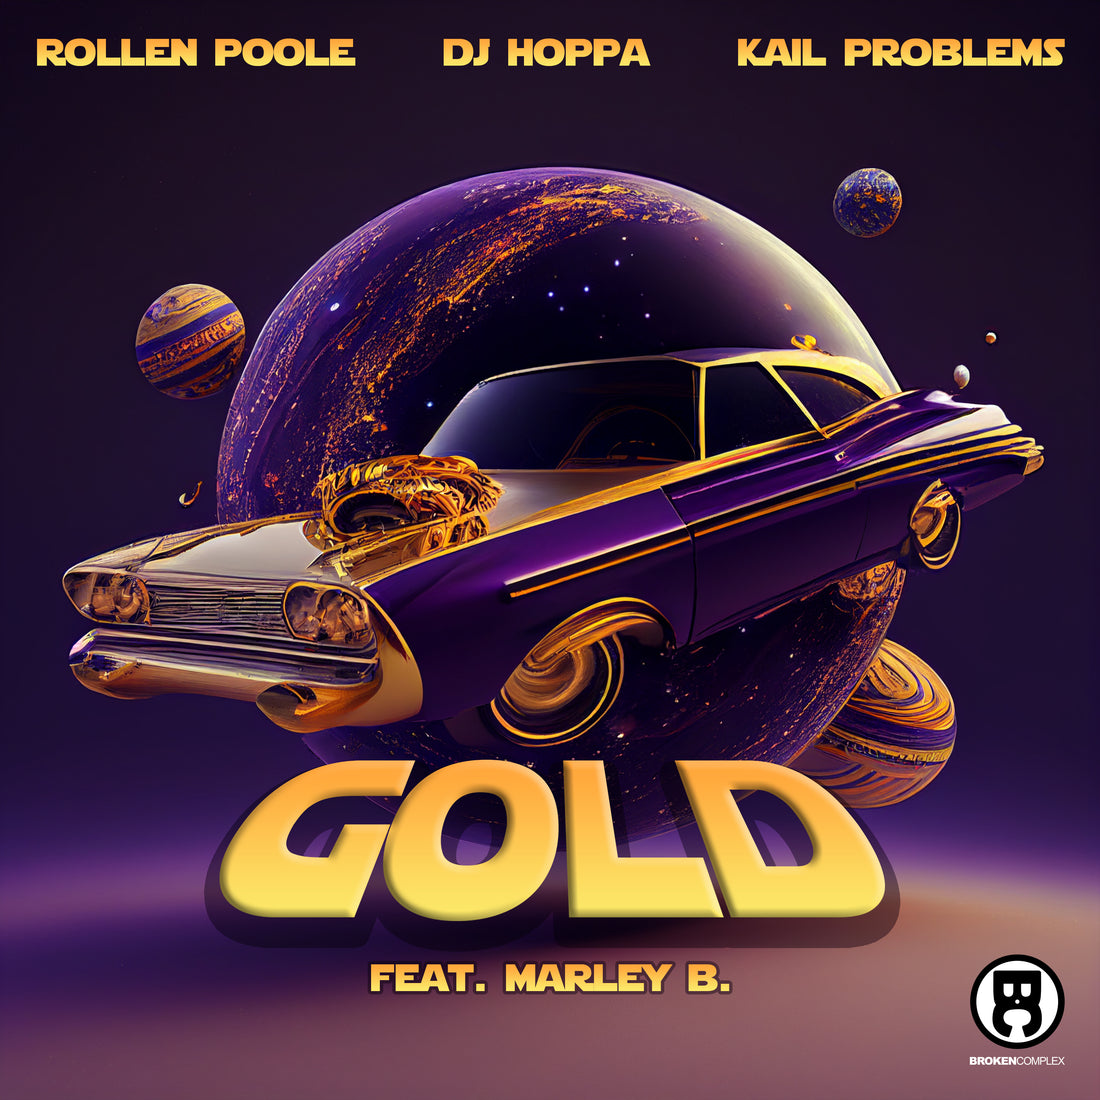 New Single: Rollen Poole, DJ Hoppa & Kail Problems - Gold feat. Marley B.